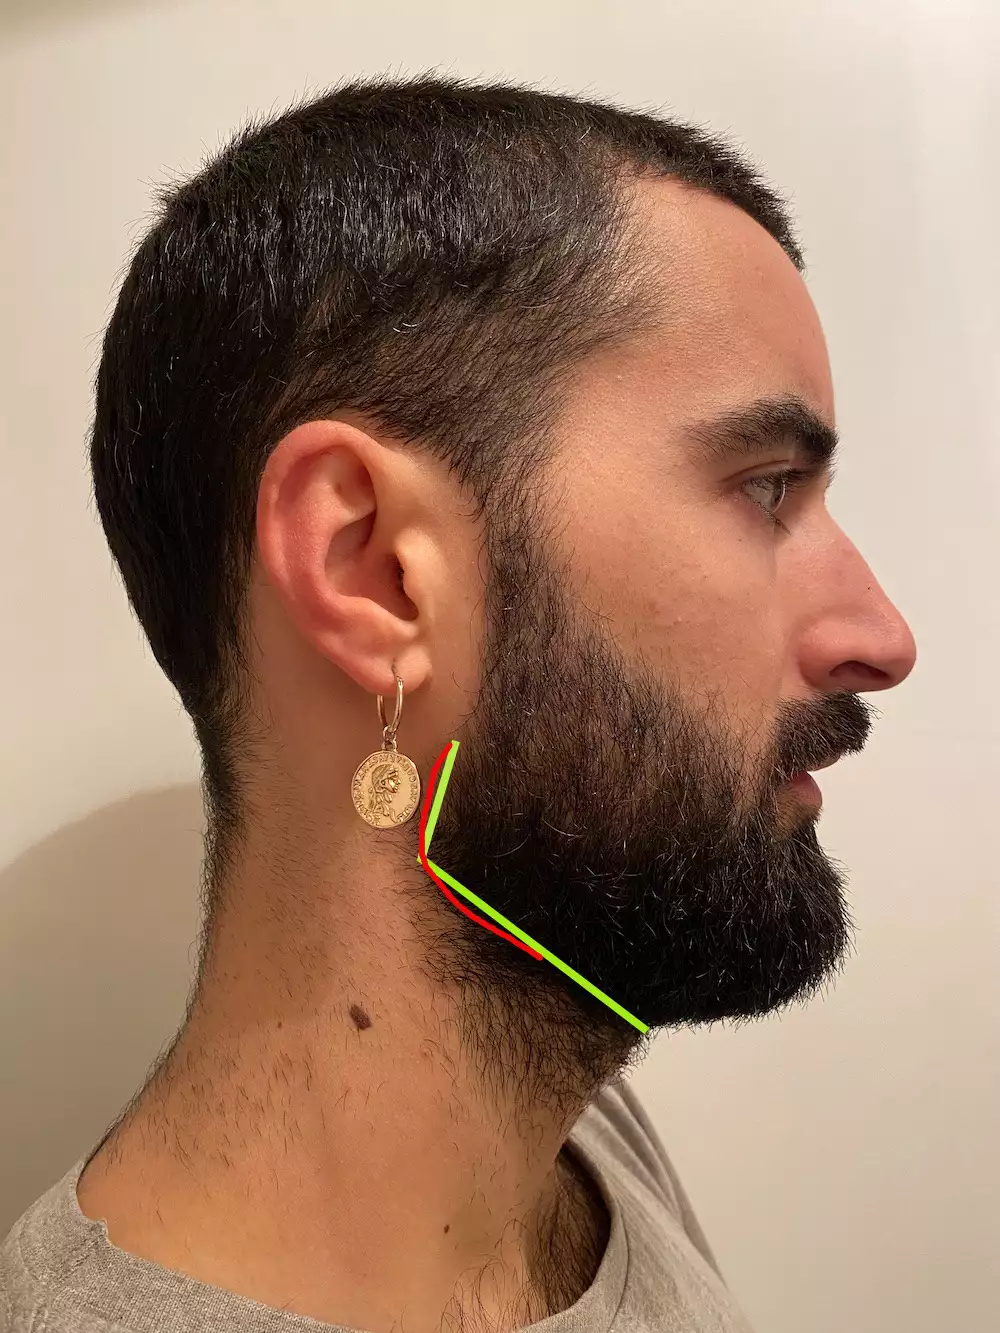 A visual of a beard neckline.